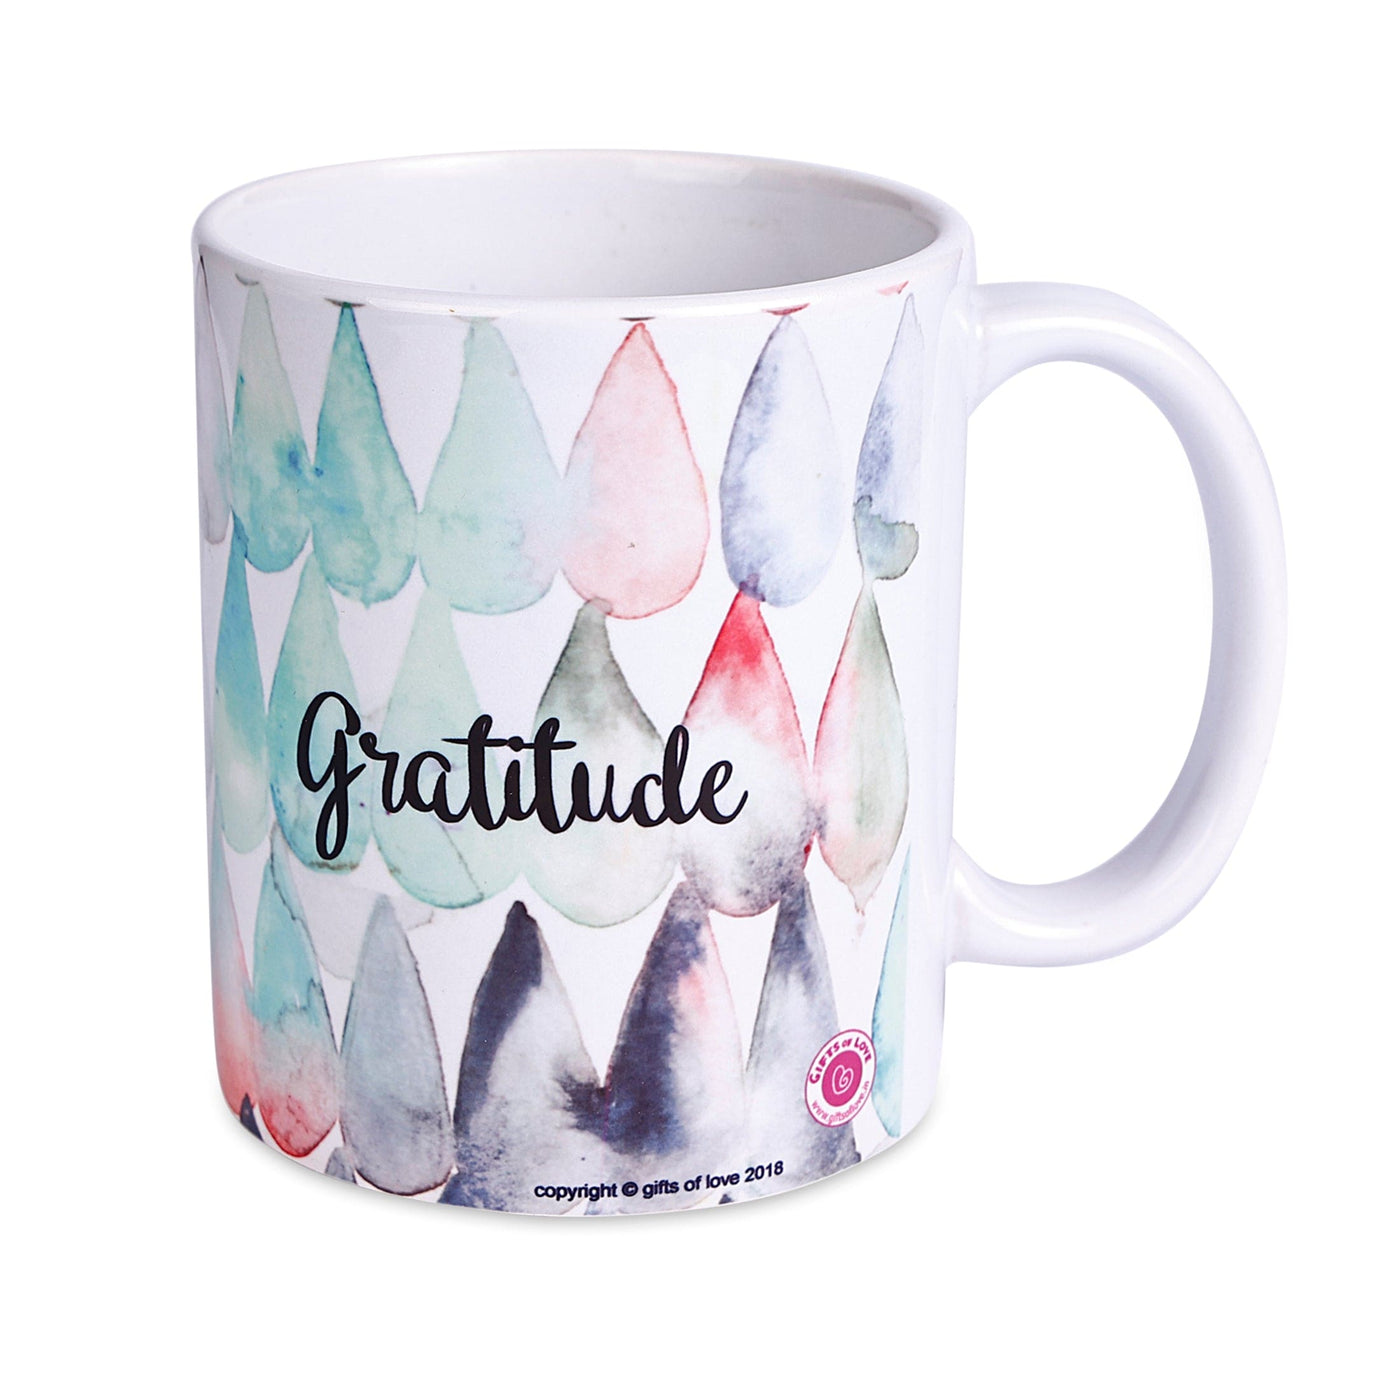 Gifts of Love Corporate Gifting Coffee Mugs